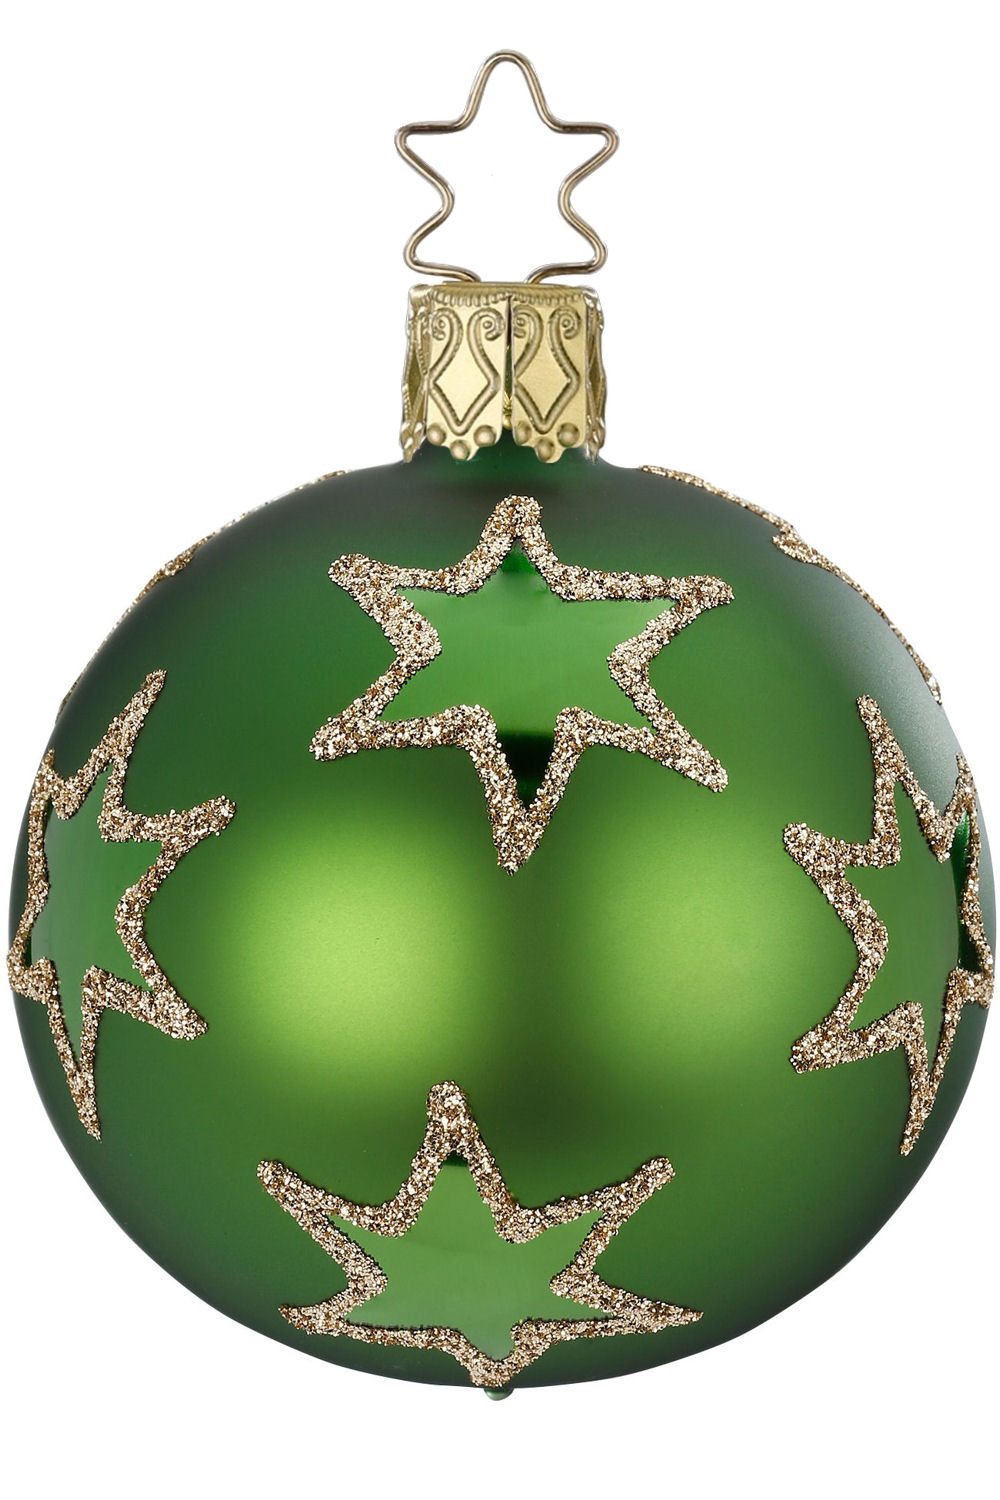 Inge Glas OWC 3657 Stars and Stripes German Glass Ornament NEW w/FREE Gift Box 